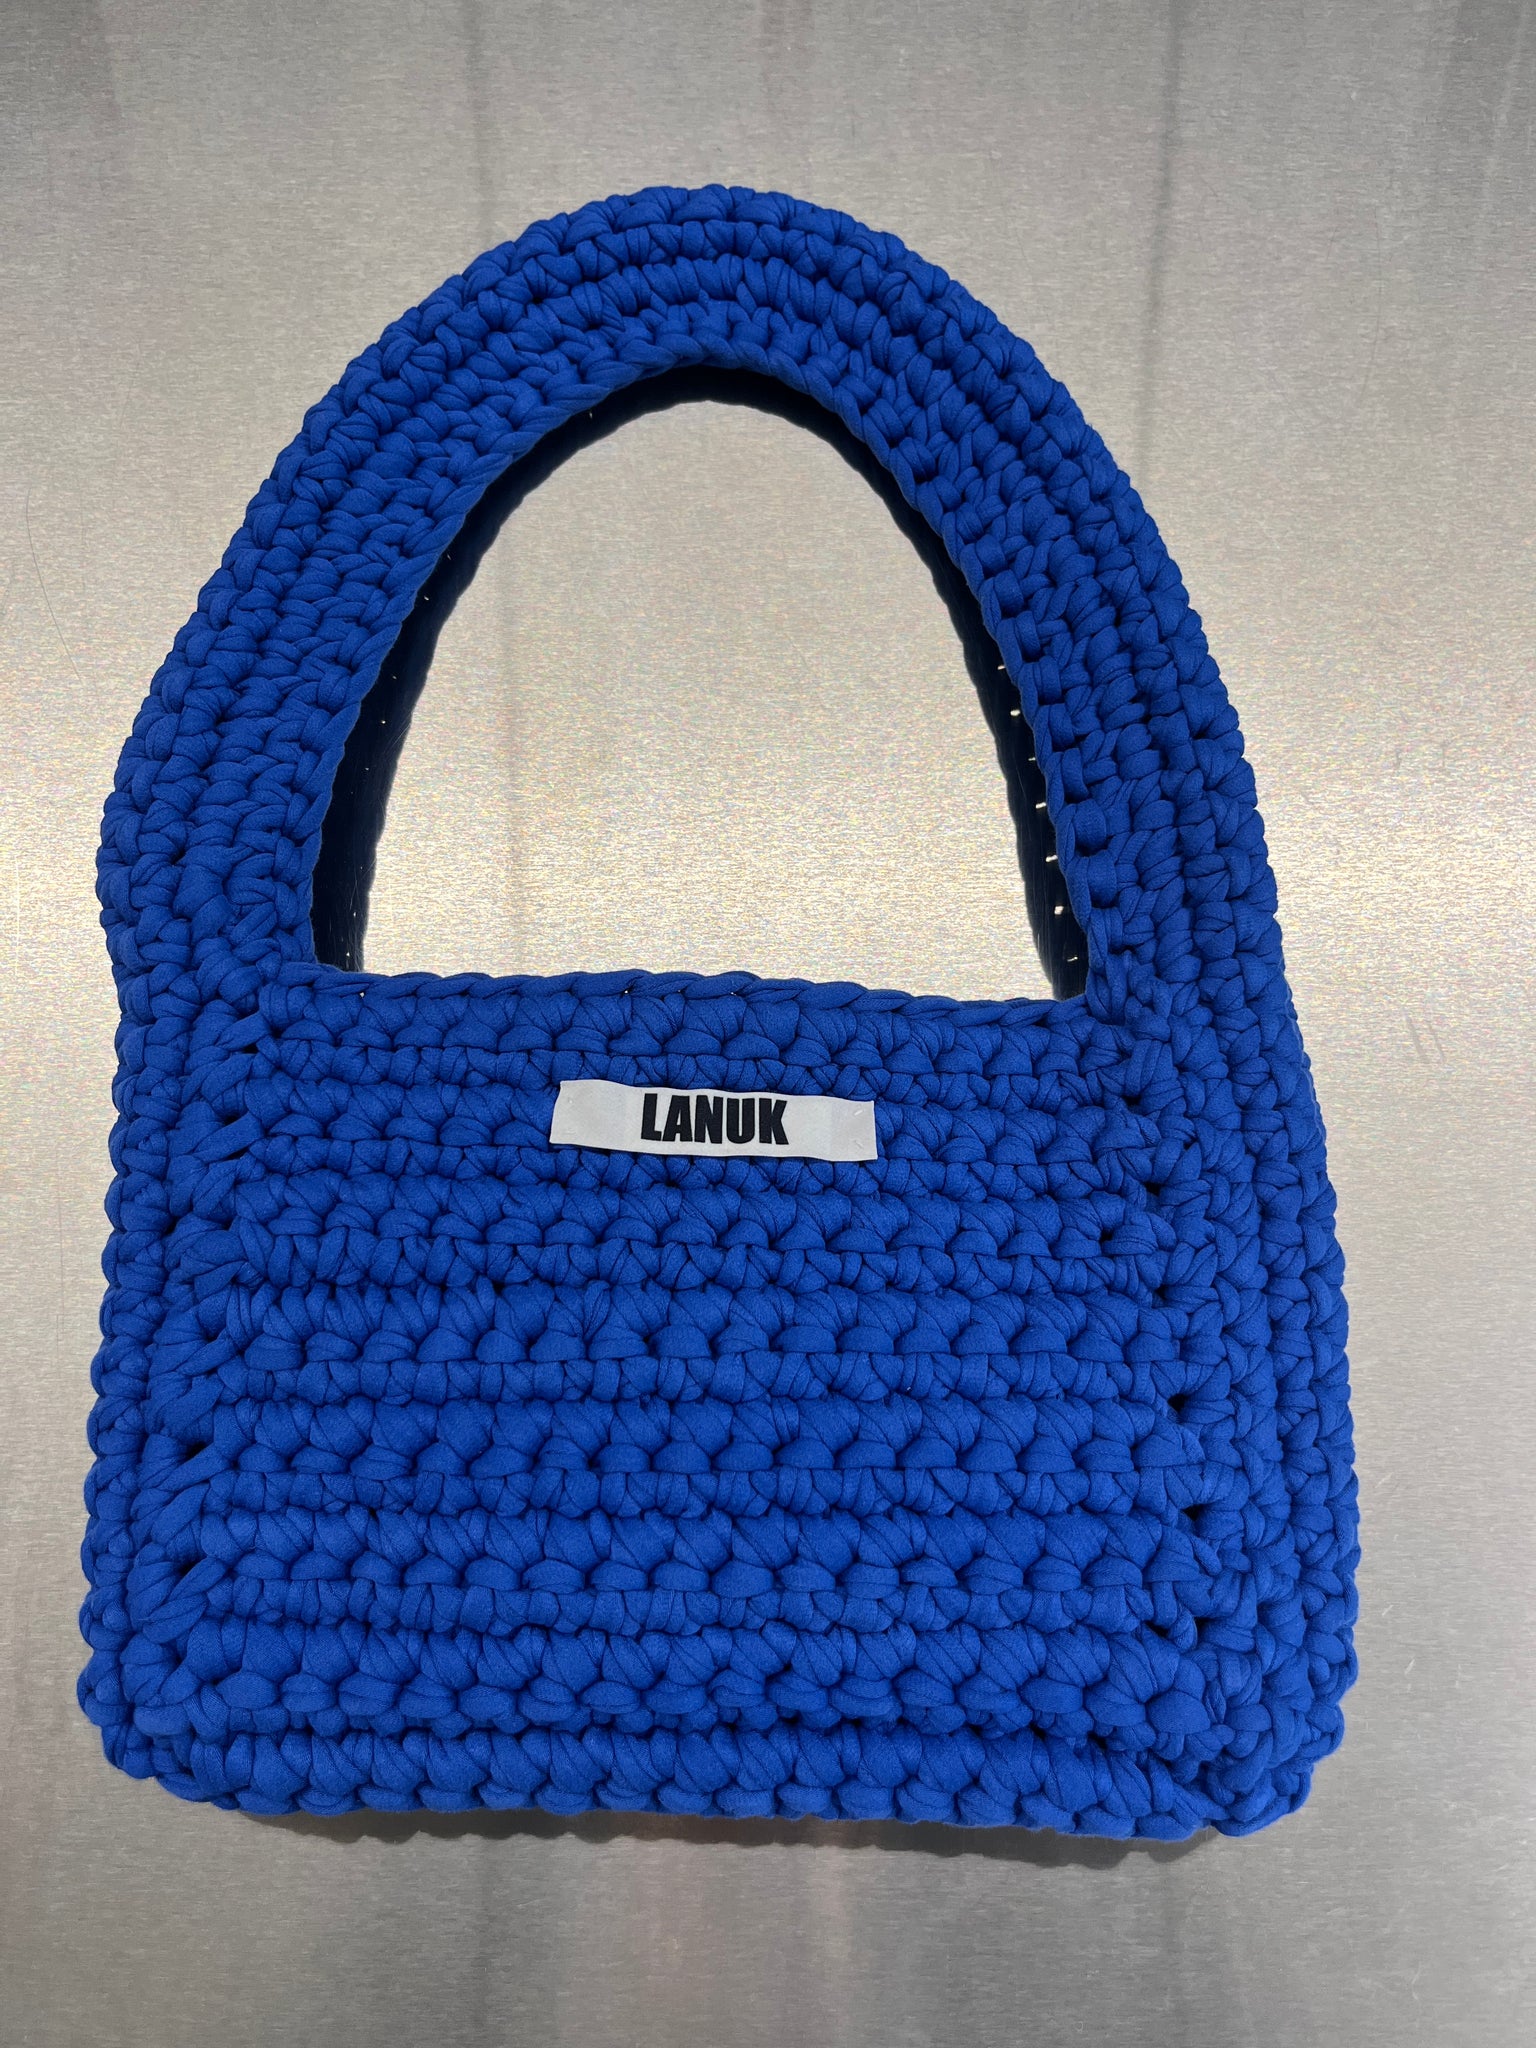 Crochet bag by LANUK studios - blue